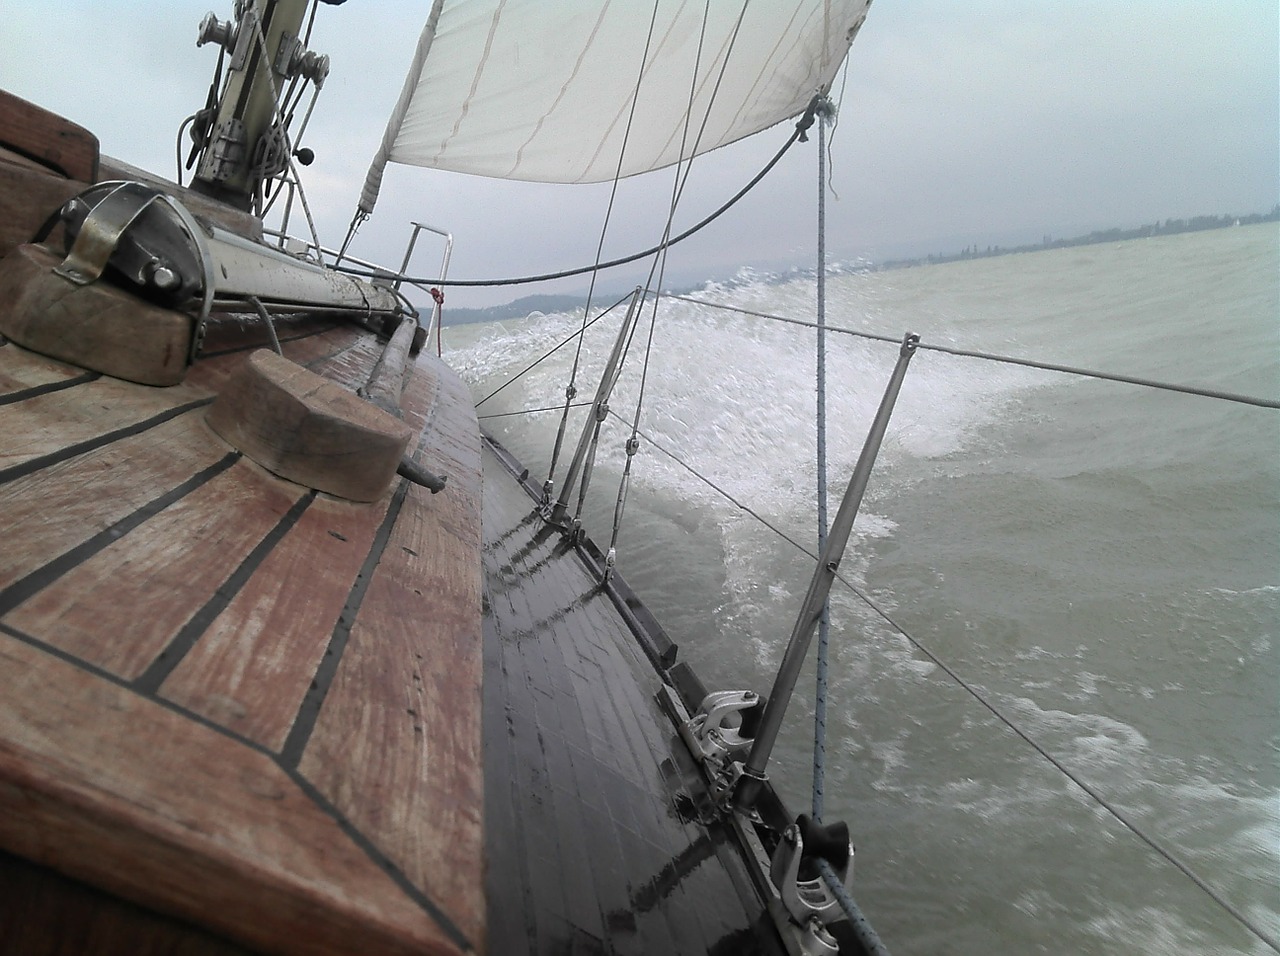 water sailing wind free photo